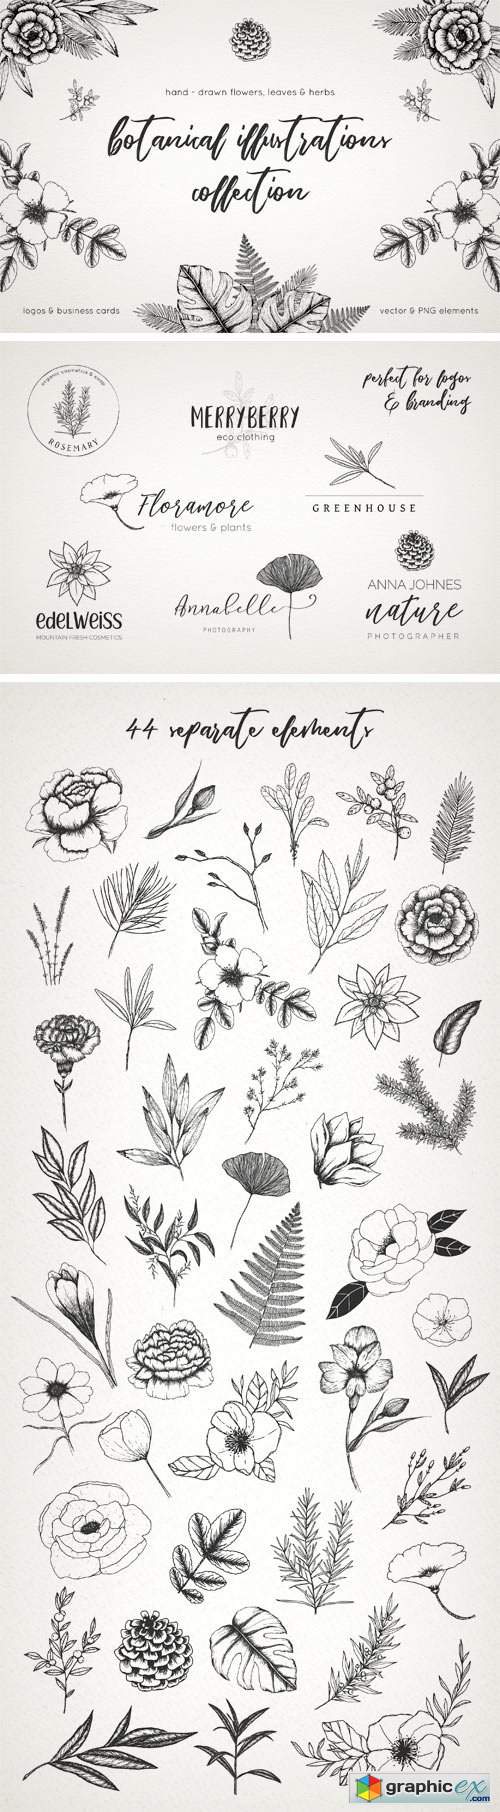 Botanical Illustrations Pack